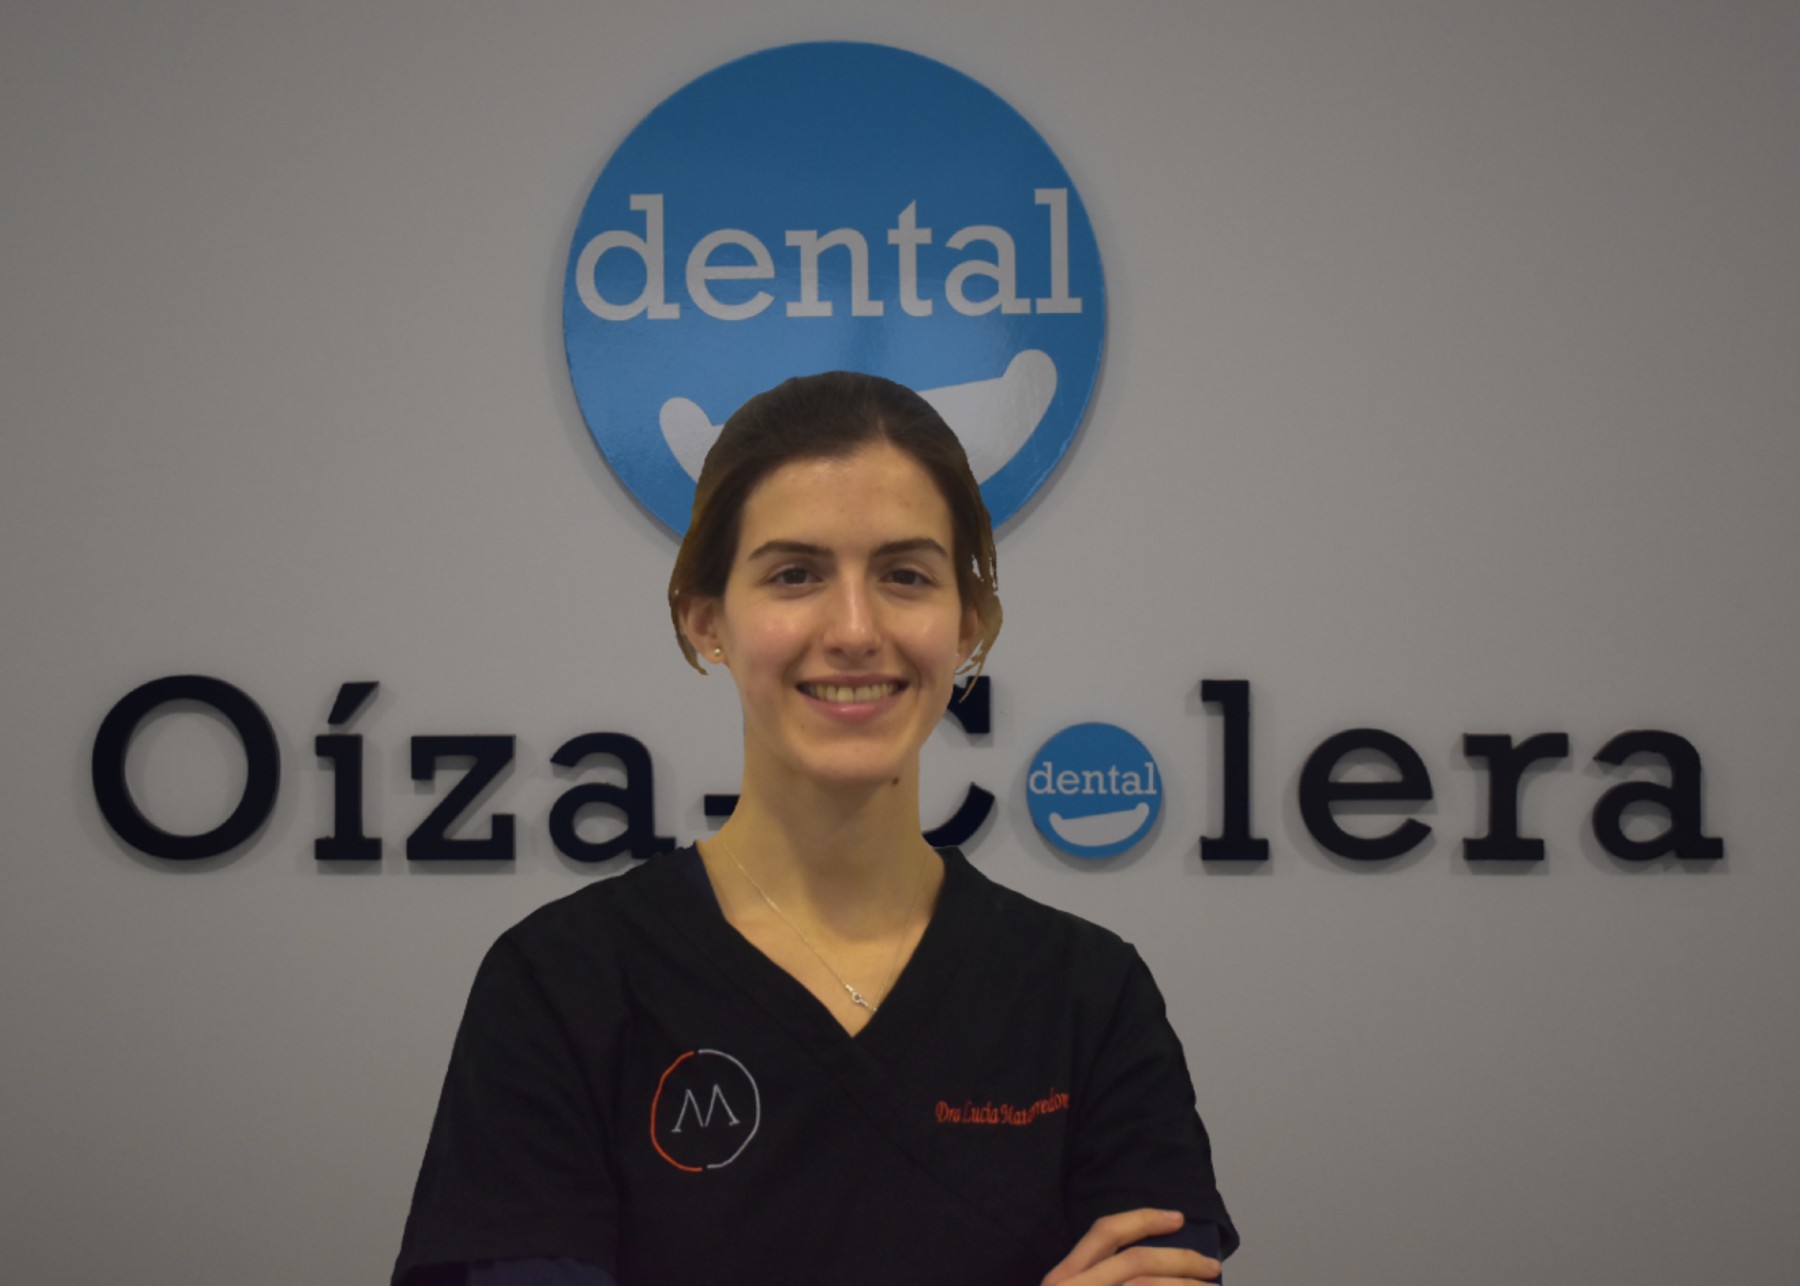 Lucía de la Clínica Dental Oíza-Colera